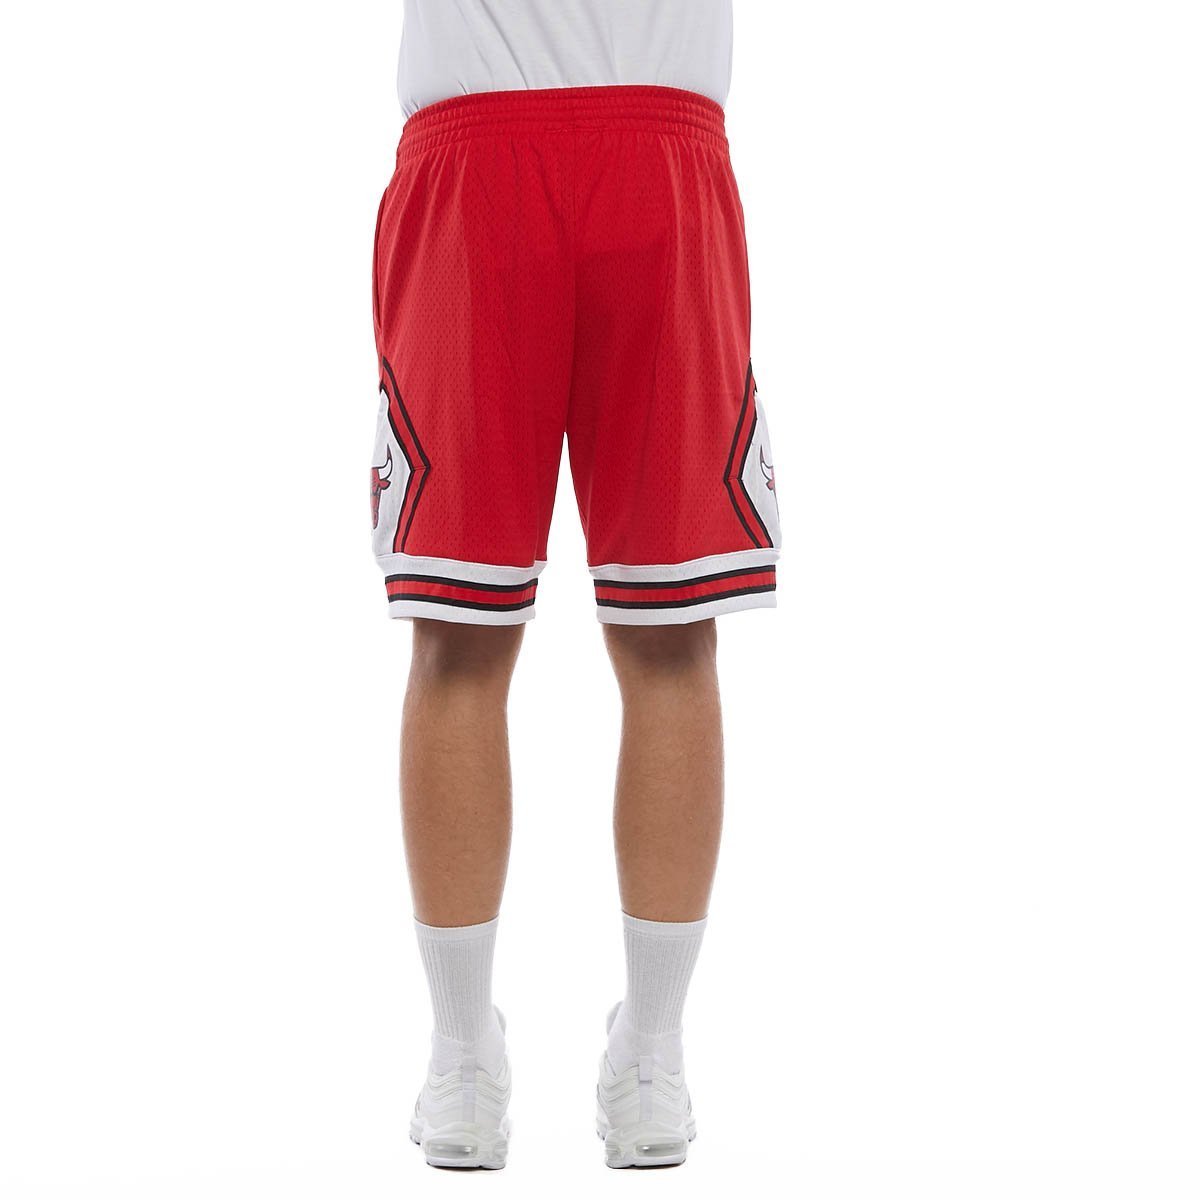 Mitchell & Ness shorts Chicago Bulls red Swingman Shorts | Bludshop.com